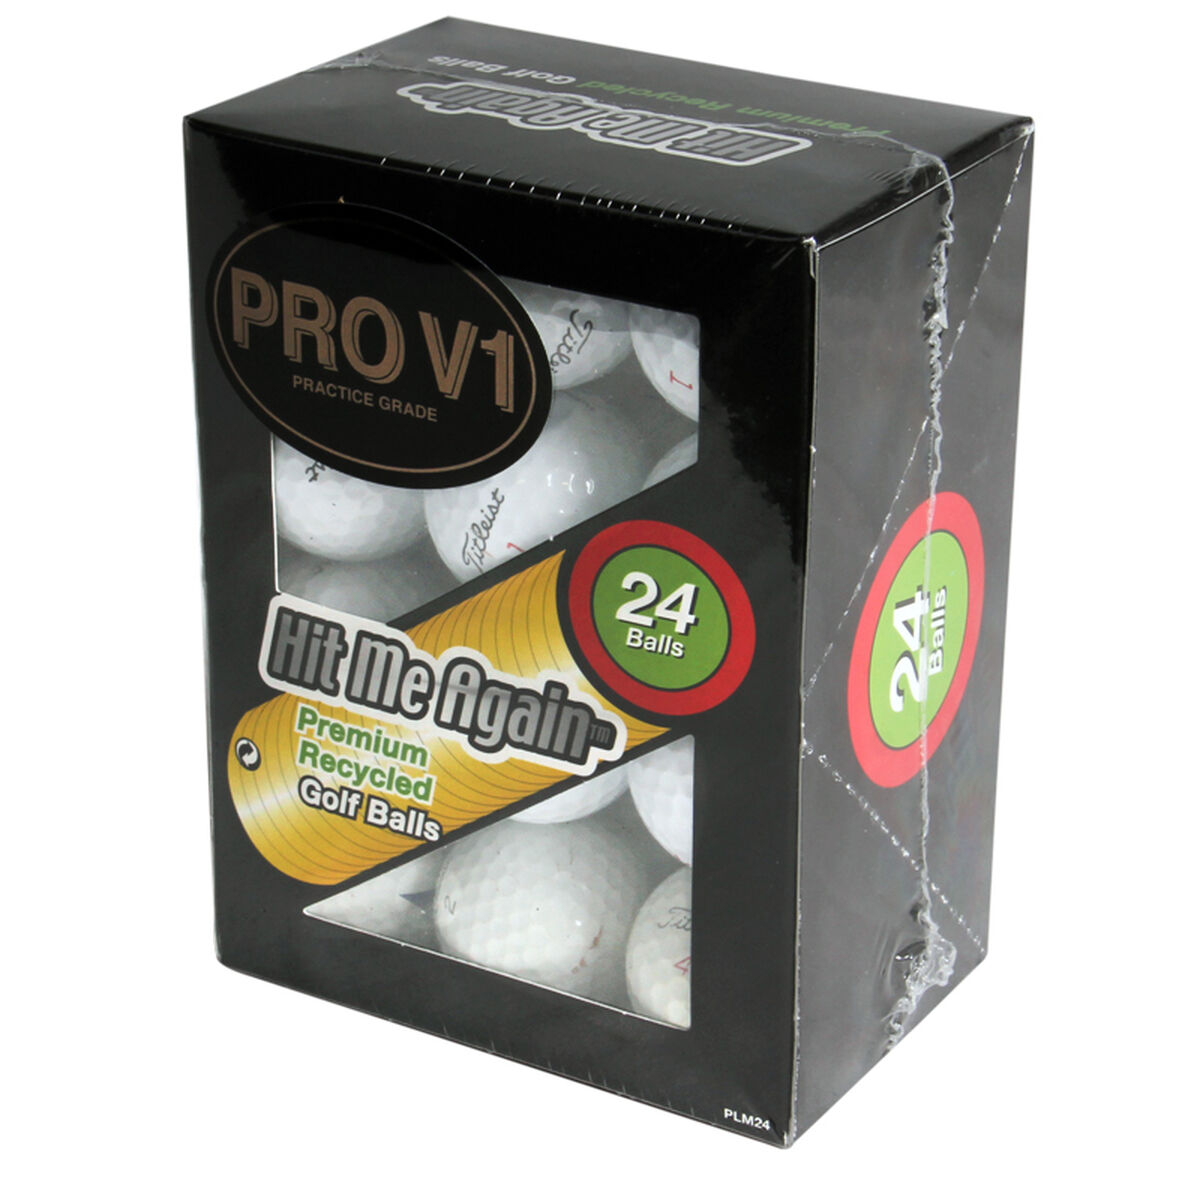 24 Balls de golf Challenge Golf Pro V1 Practice, homme, Blanc | Online Golf